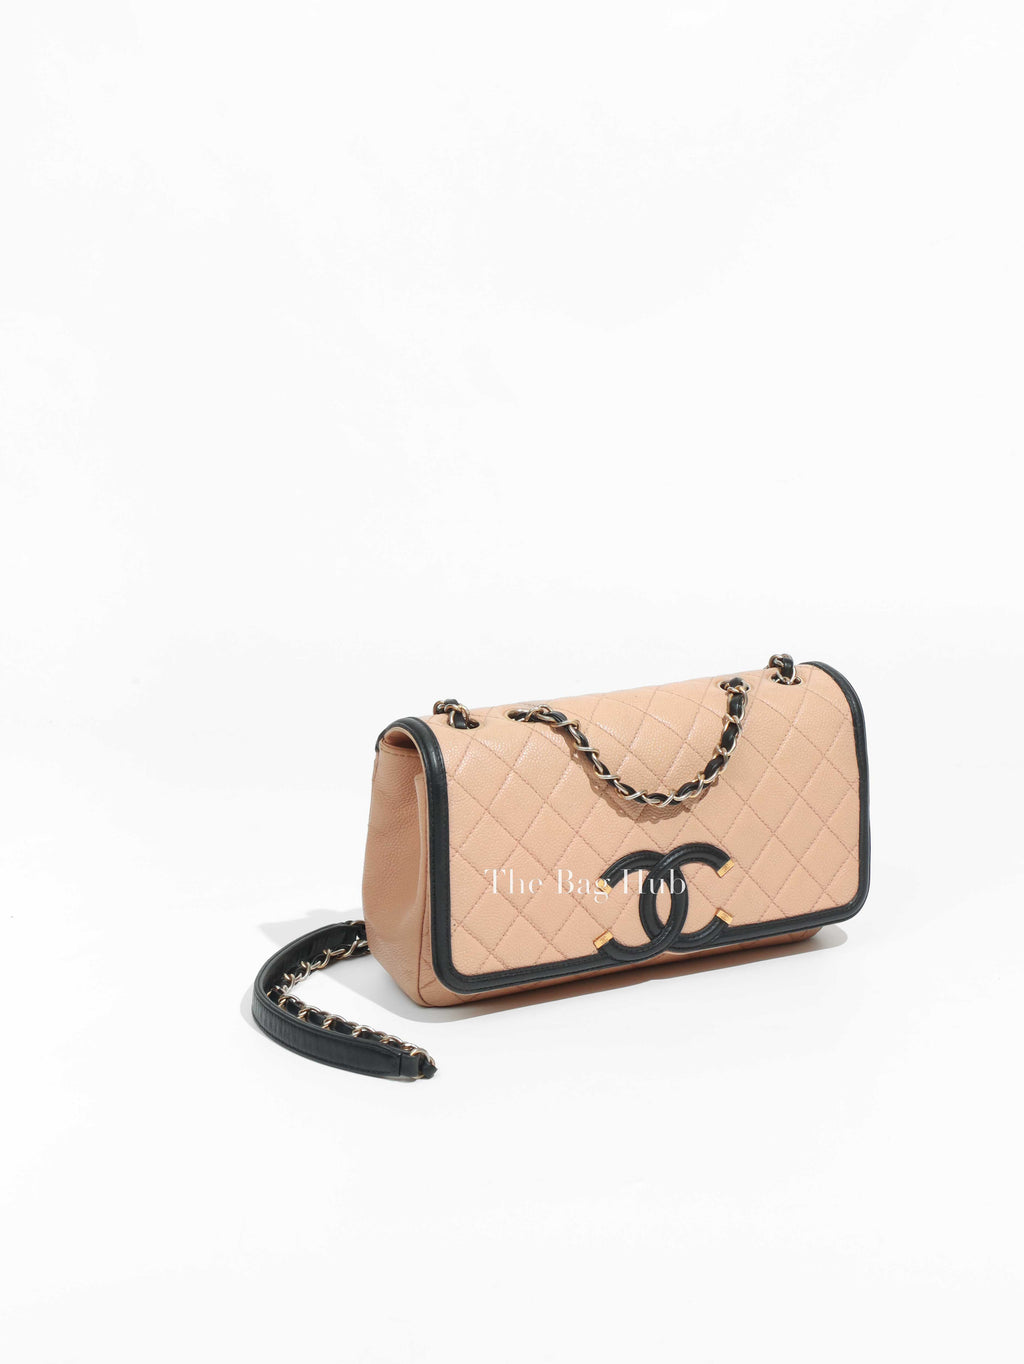 Chanel Beige Caviar Quilted Medium Filigree Flap Bag